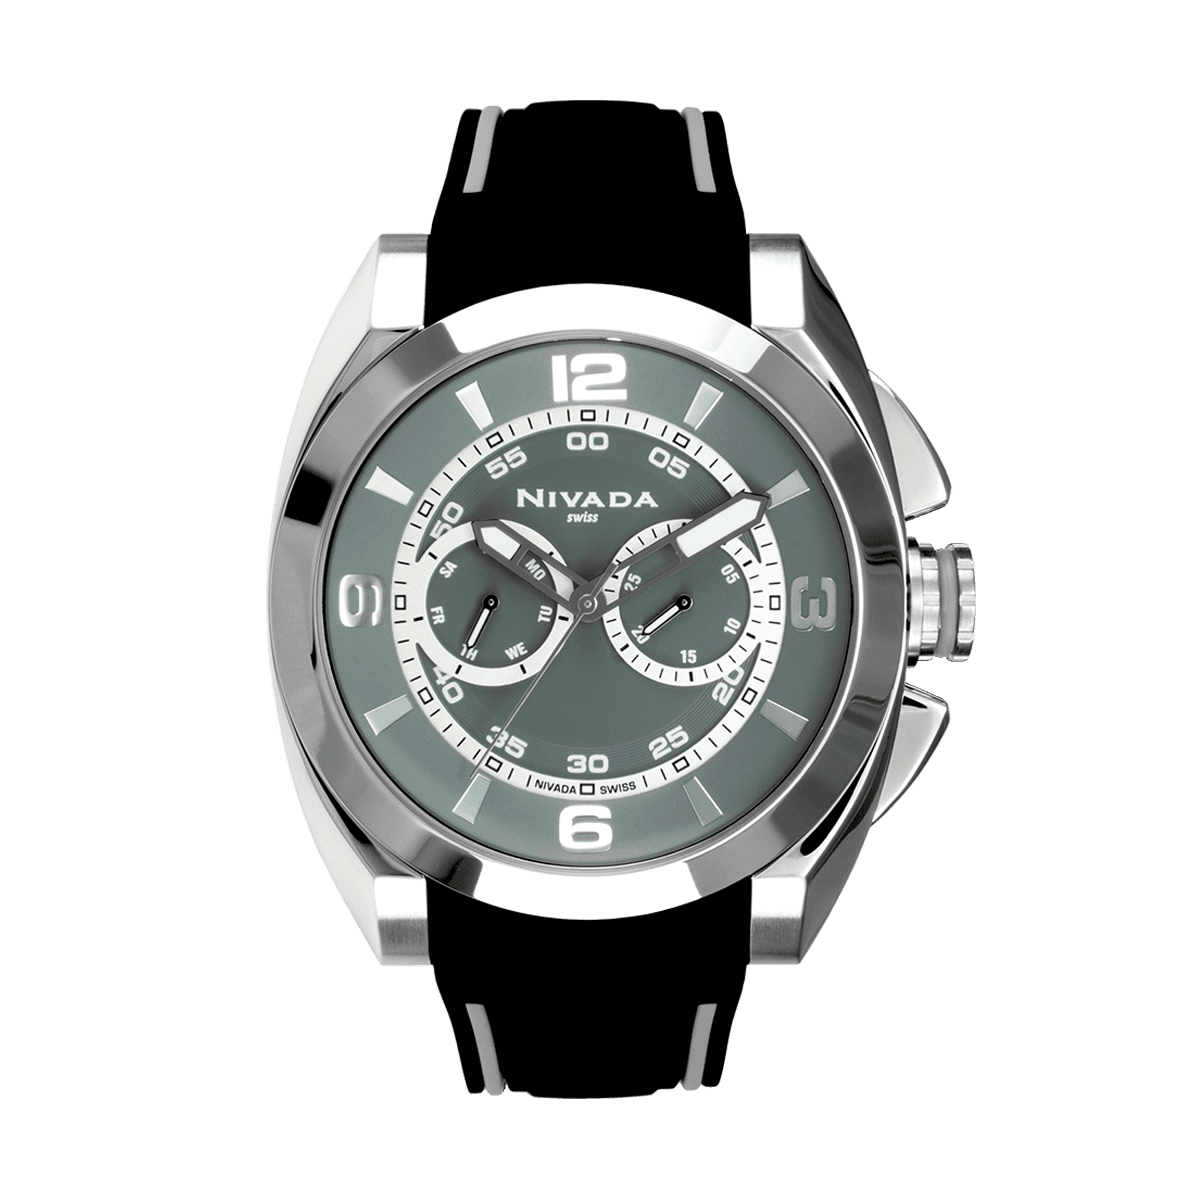 GEAR Para CABALLERO - Altitud 1560 - Reloj Nivada Swiss